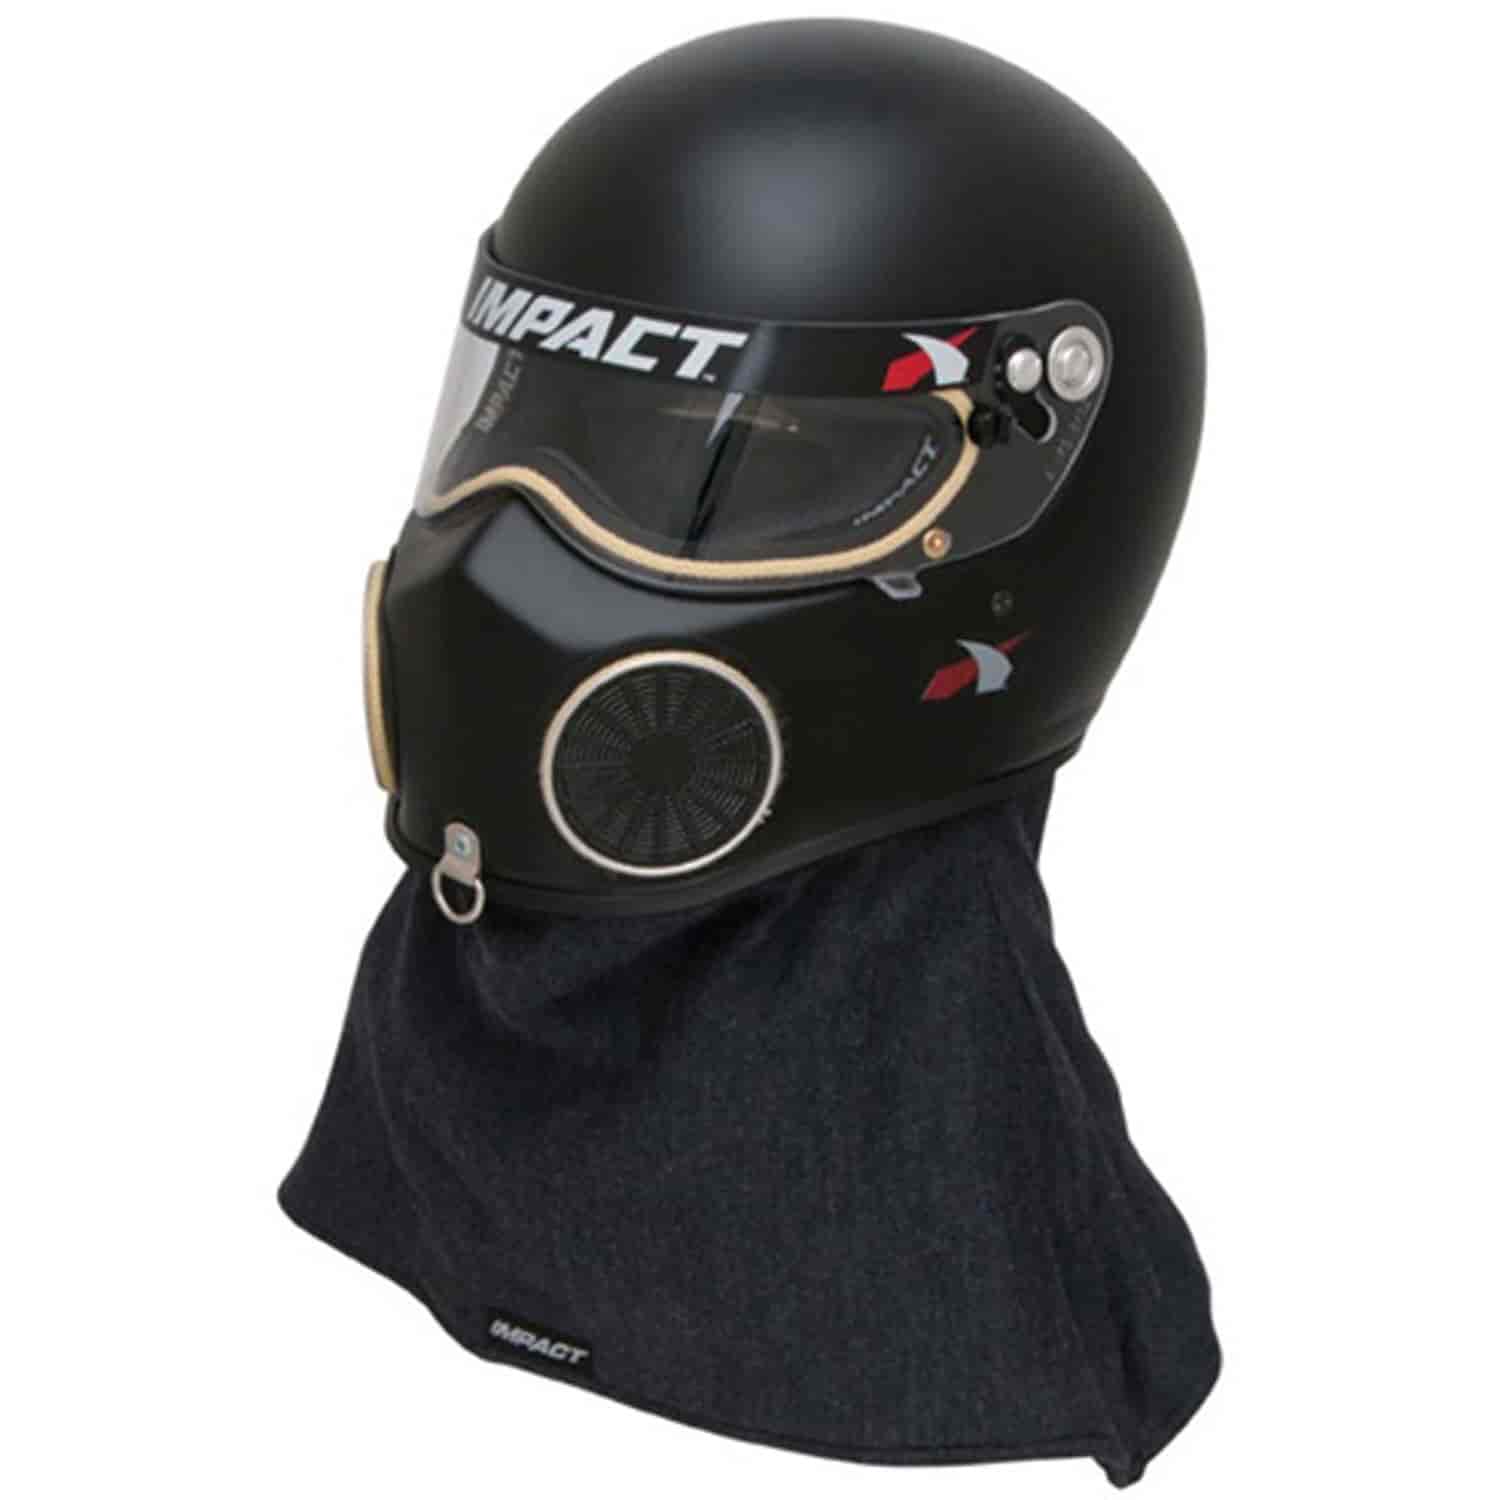 Nitro Helmet SA2015 Certified